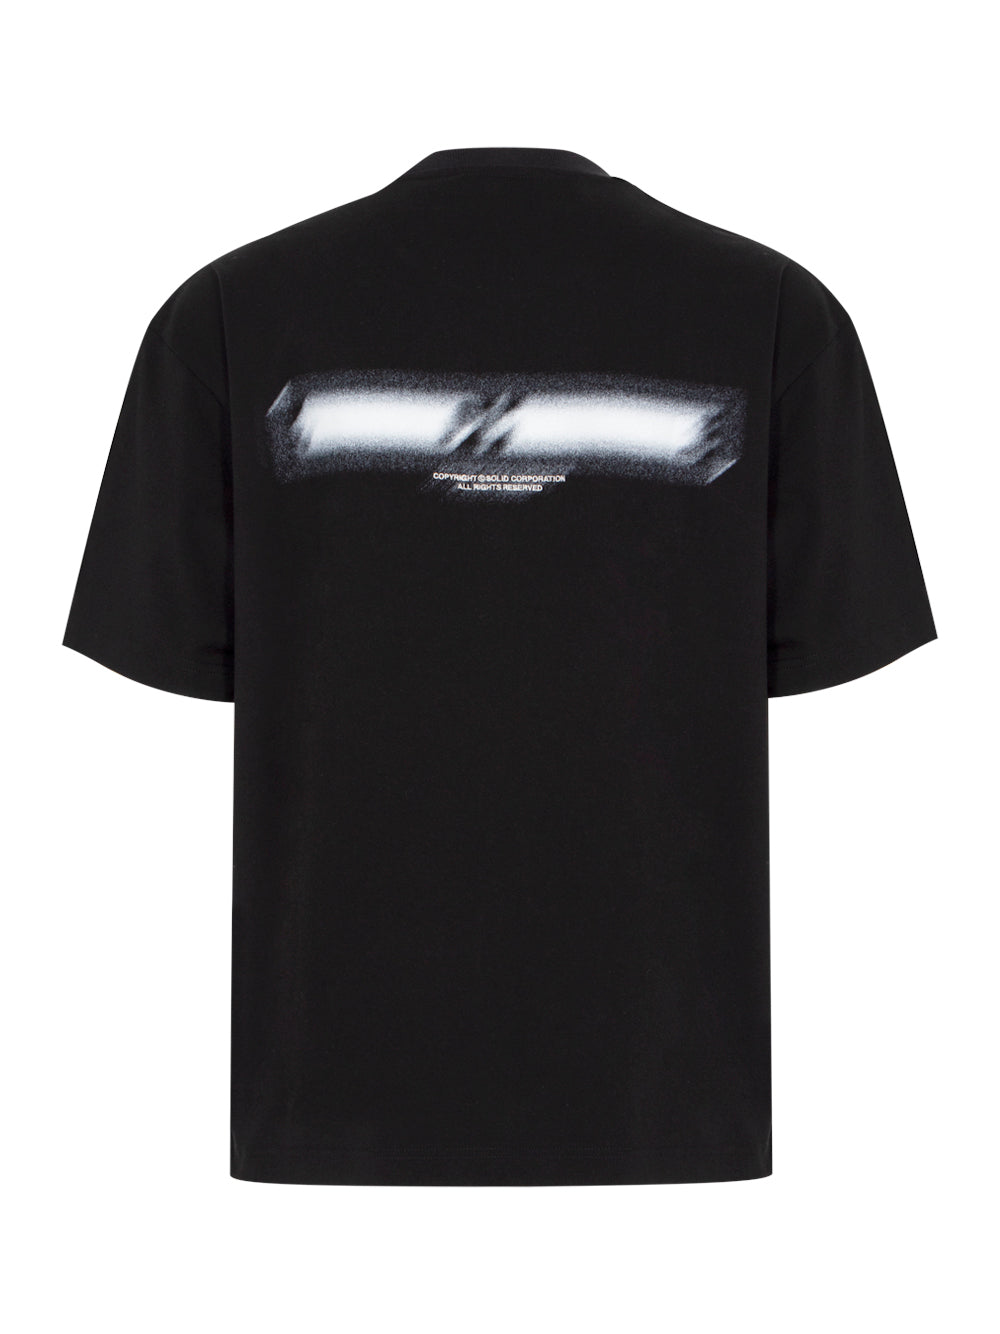 Blur T-Shirt (Black)